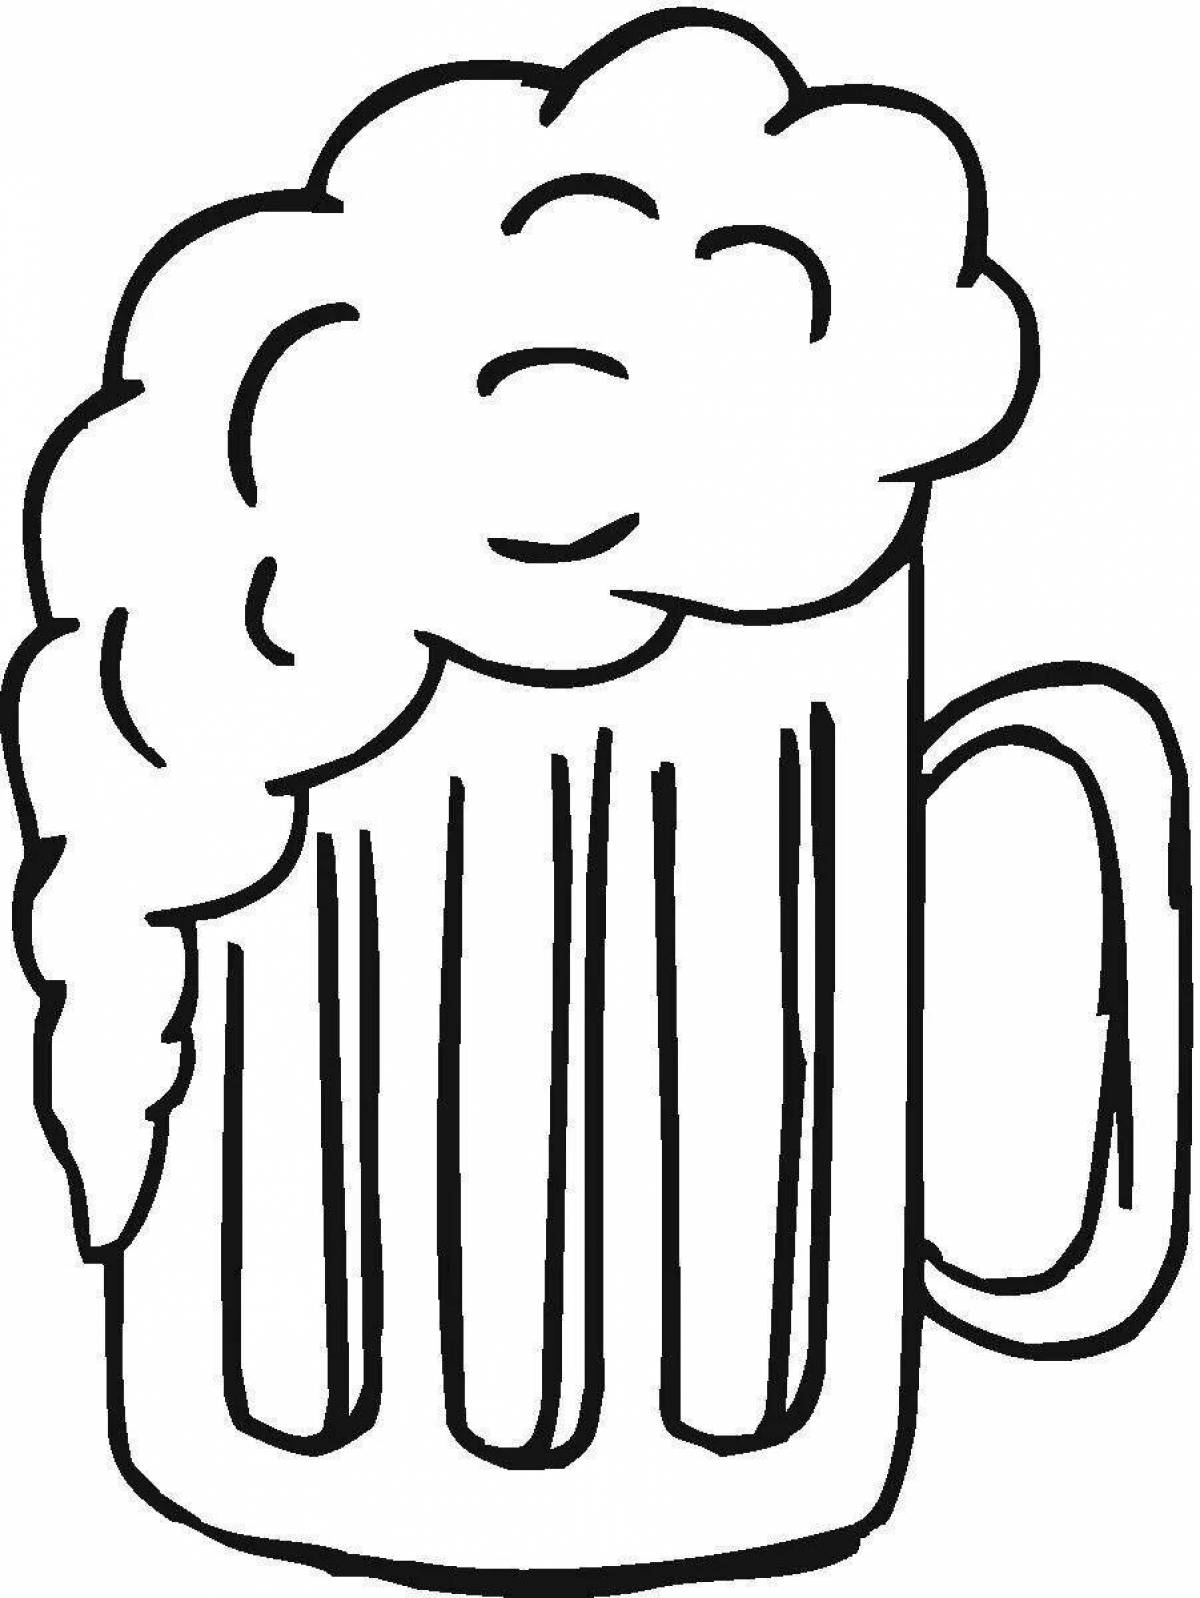 Cloudy beer mug coloring